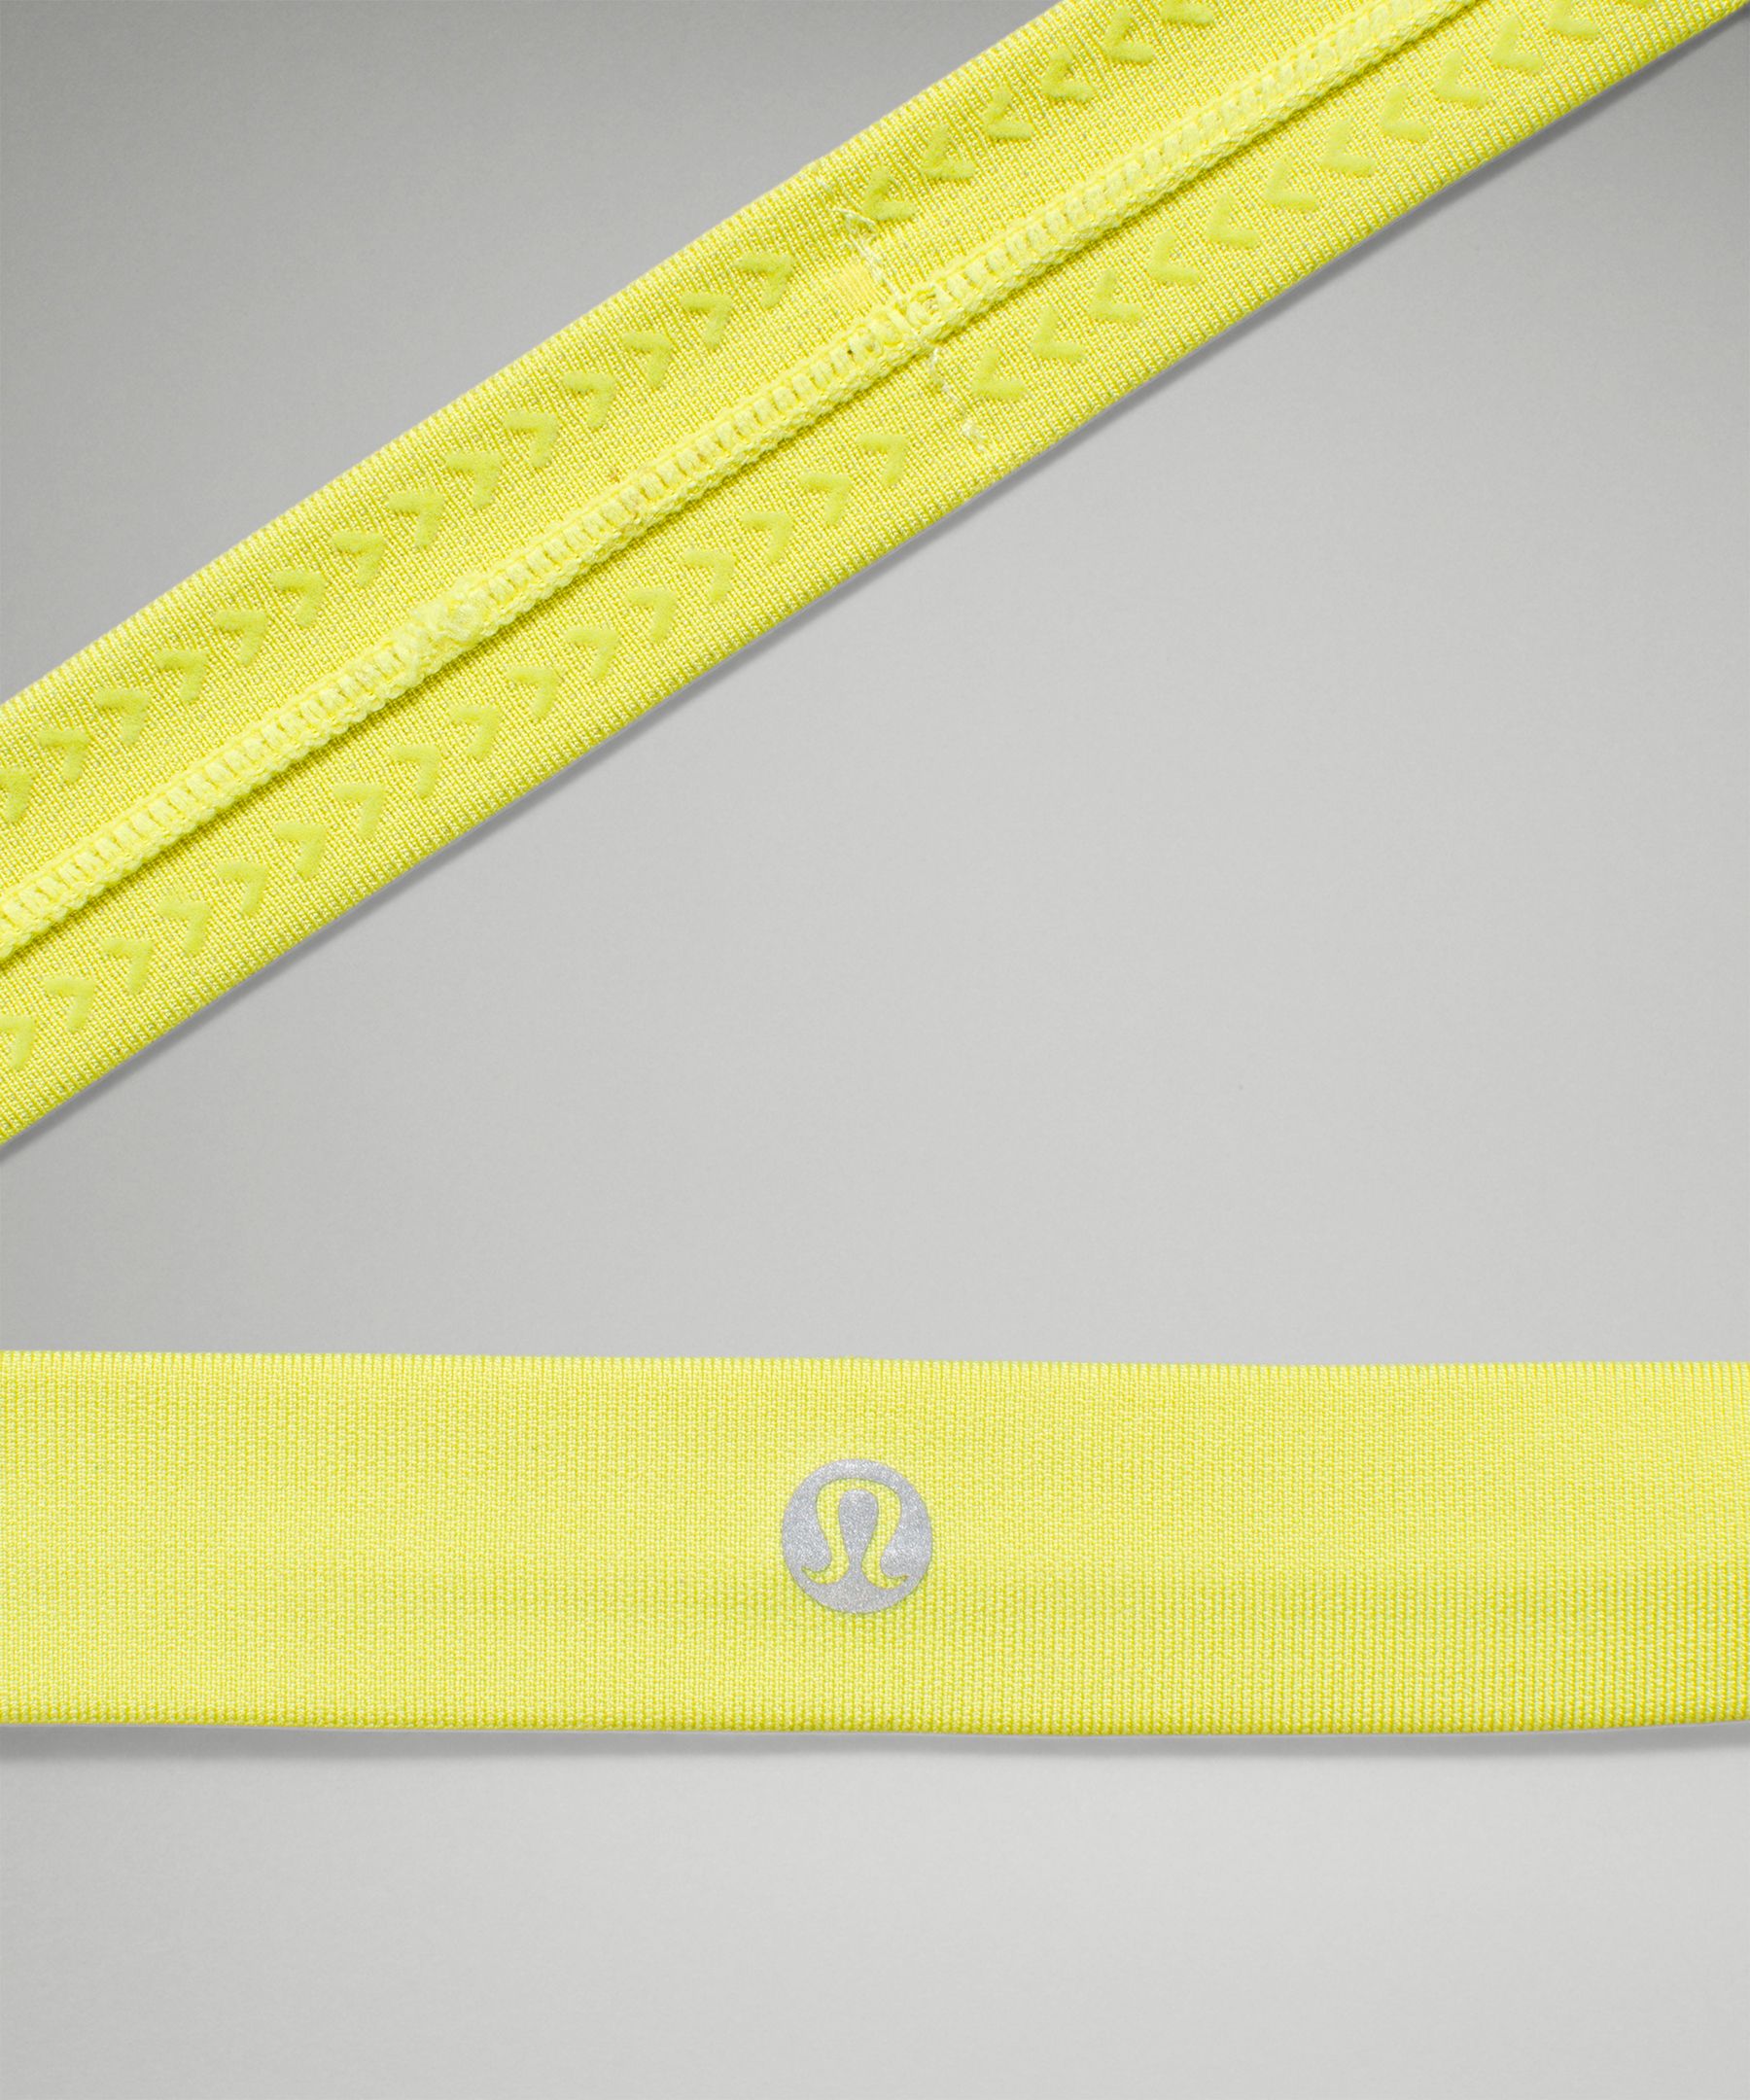 Lululemon Cardio Cross Trainer Headband In Yellow